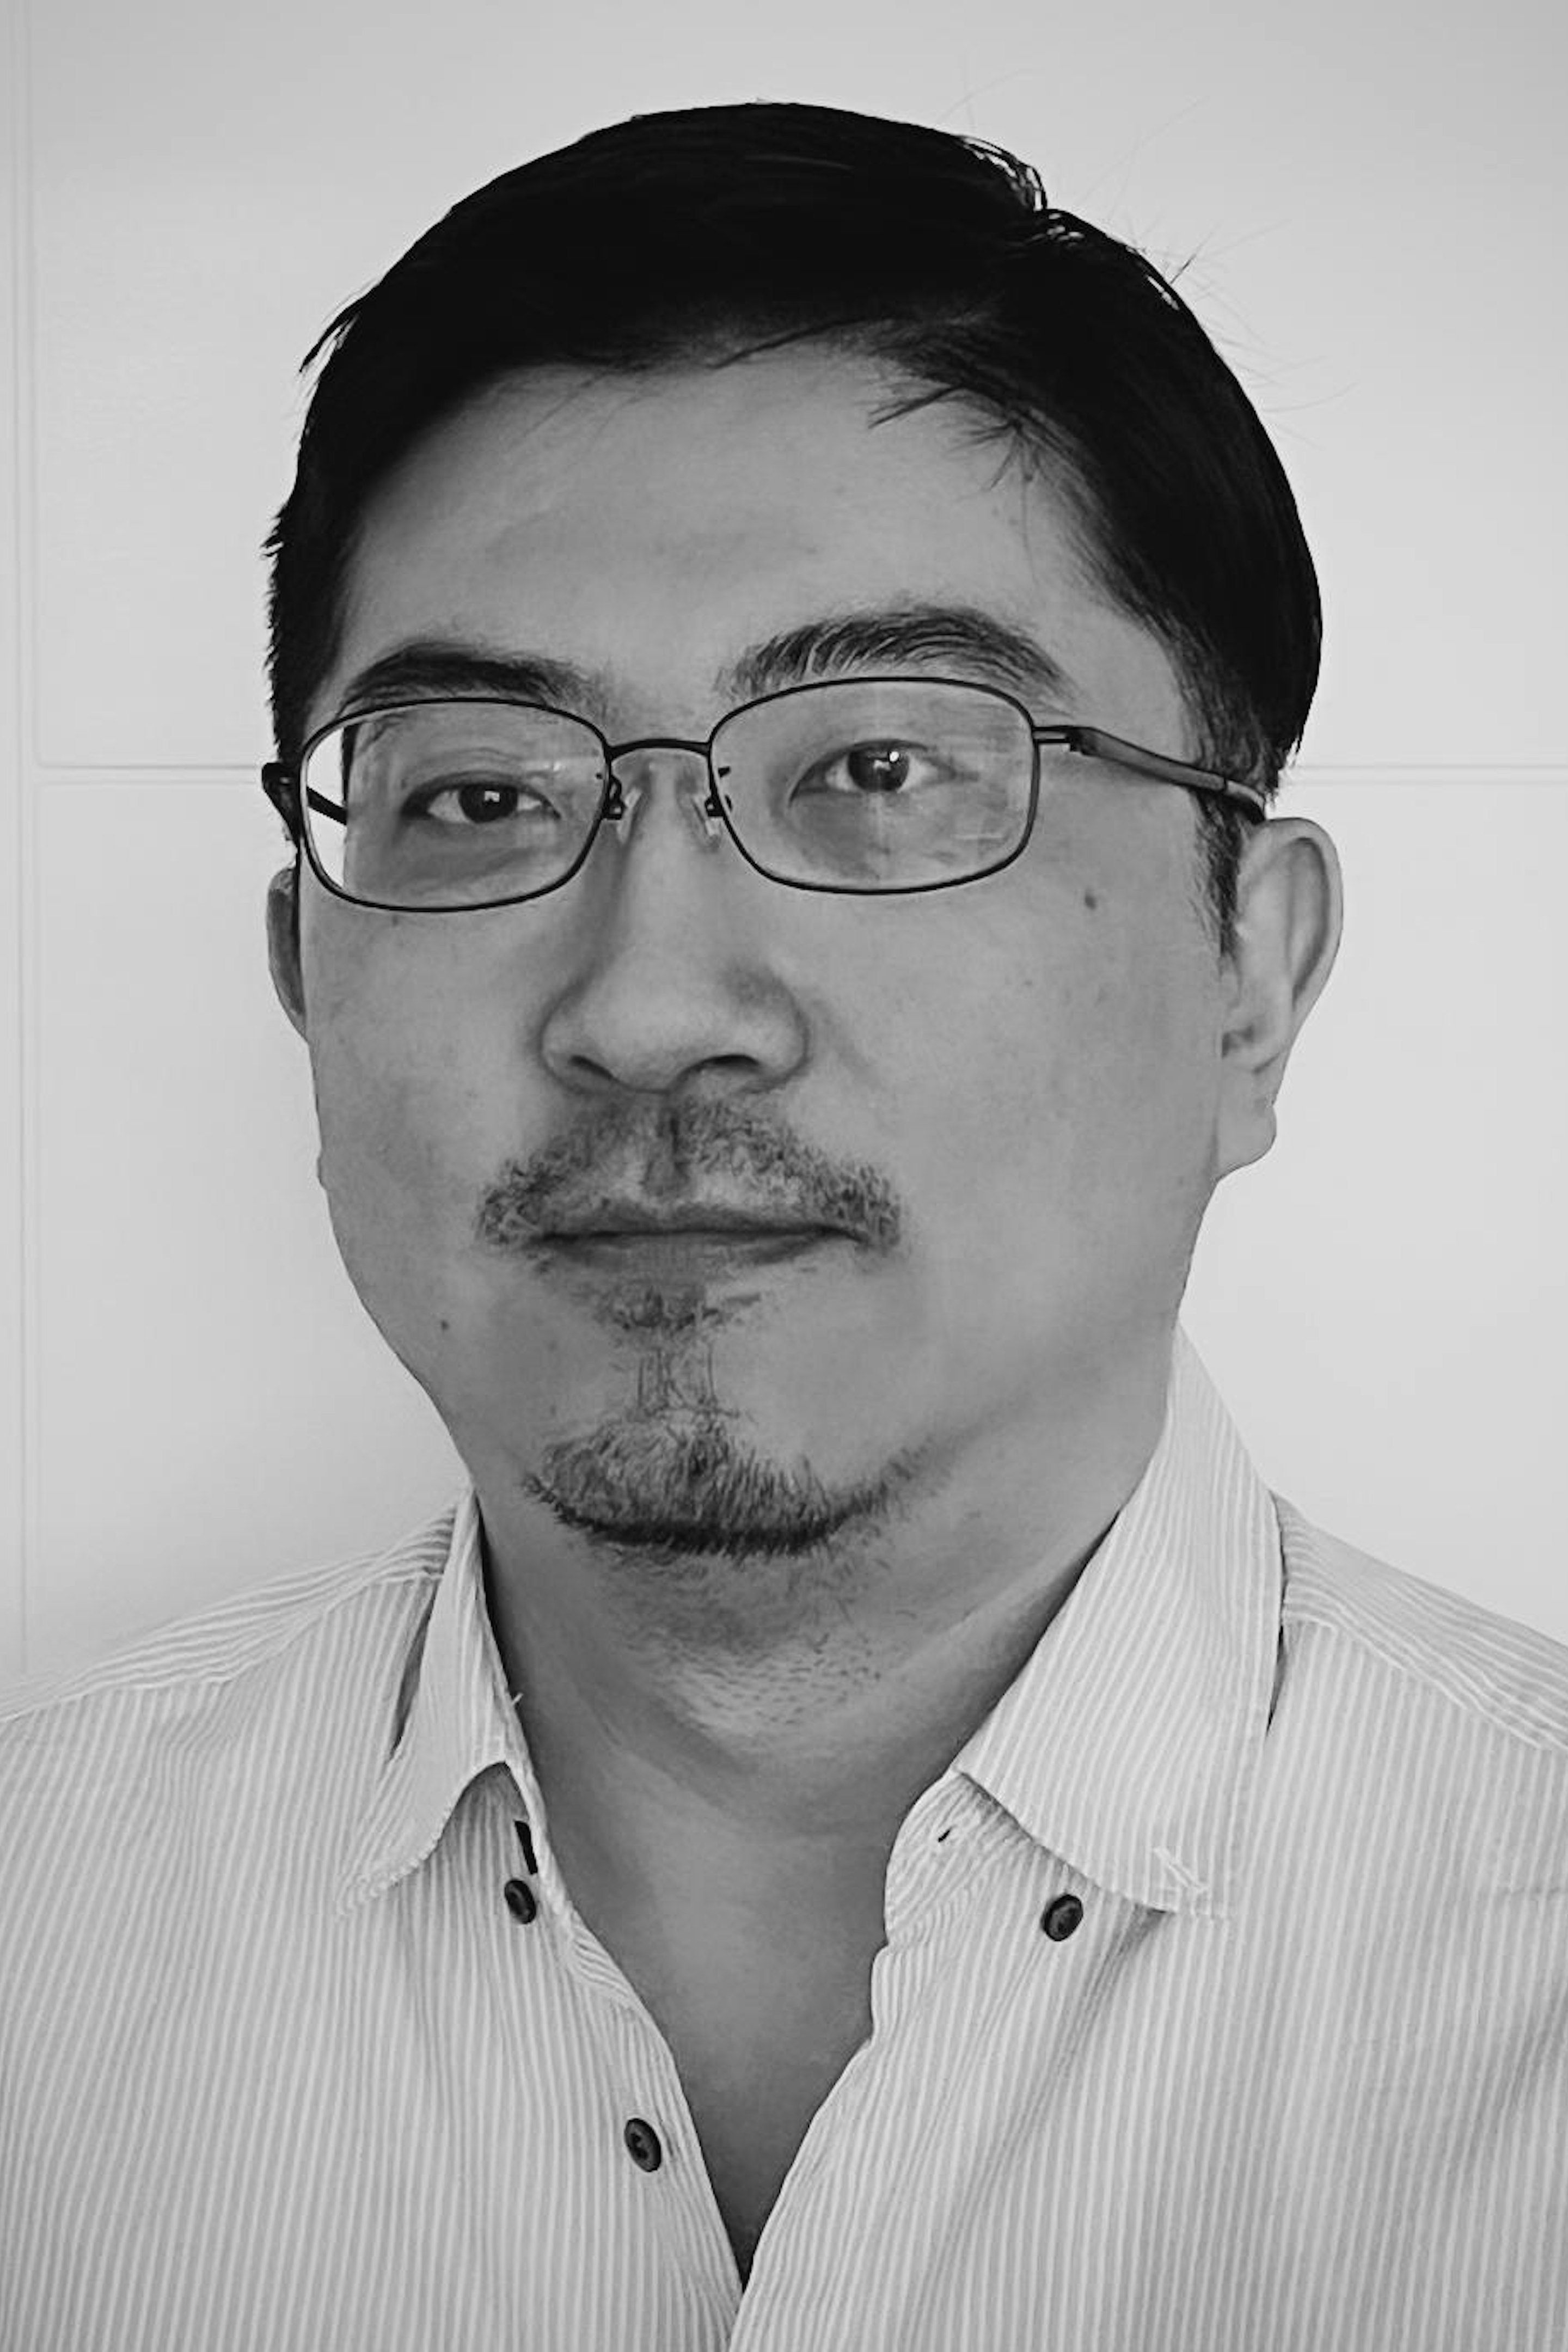 The Embassy Appoints Steve Woo as Head of Studio